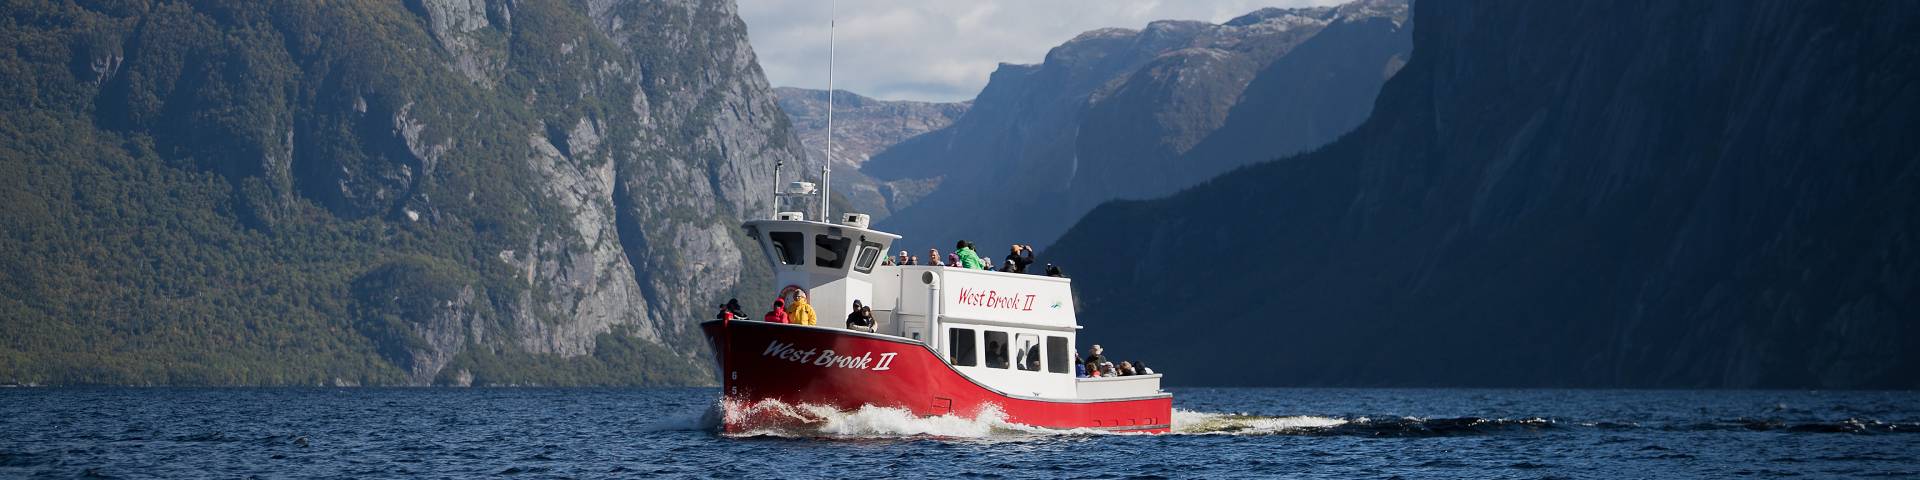 fjord boat tour gros morne